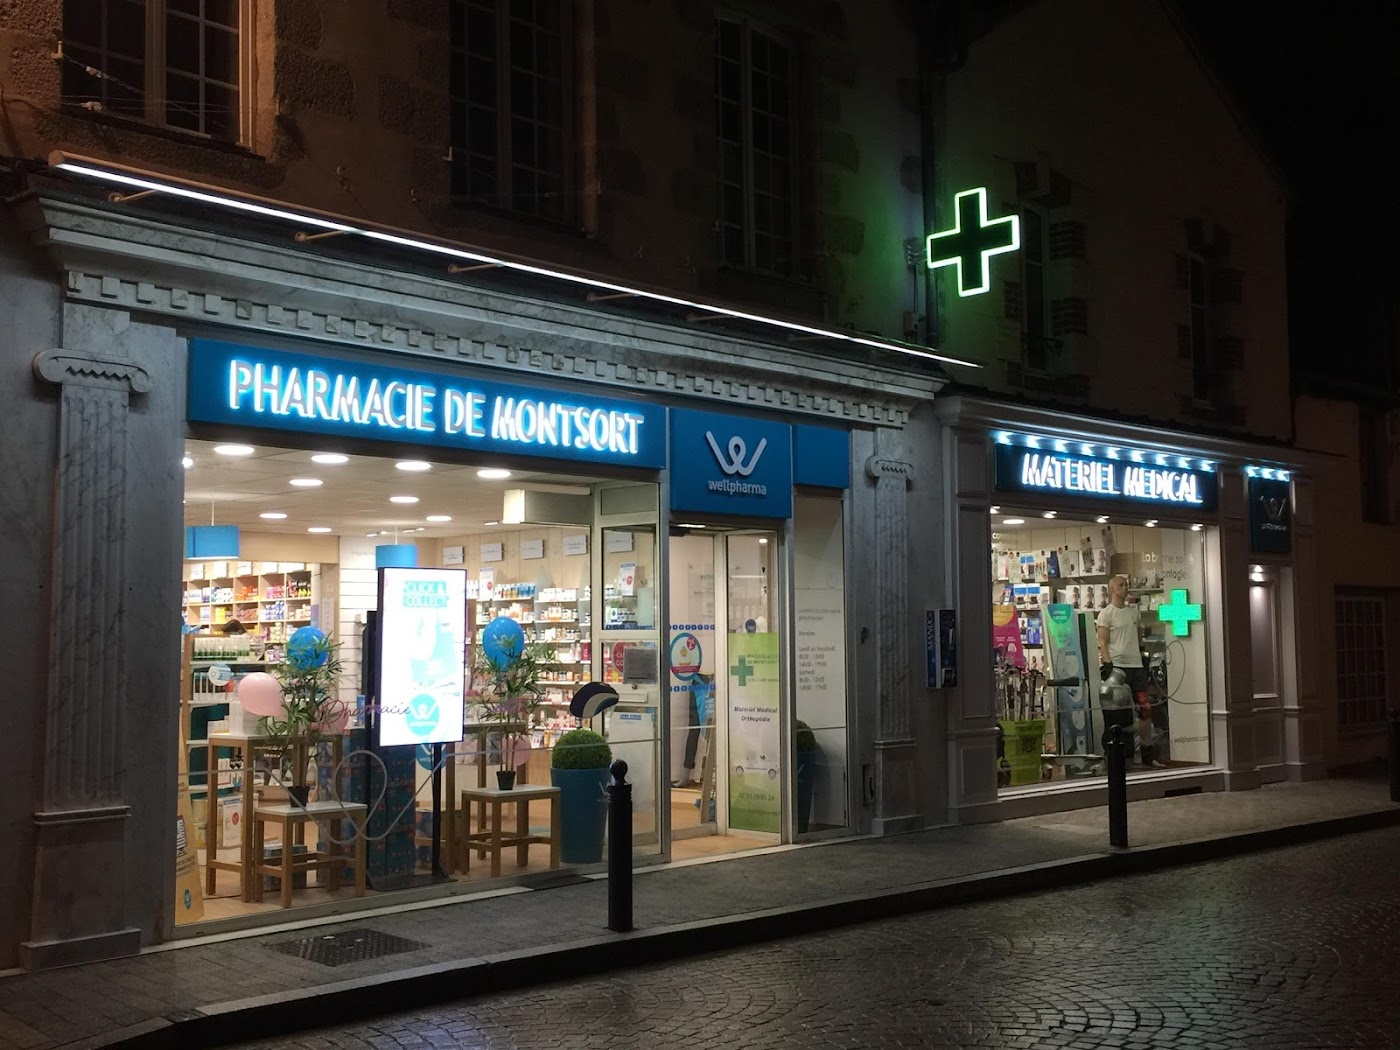 Pharmacie wellpharma | Pharmacie de Montsort